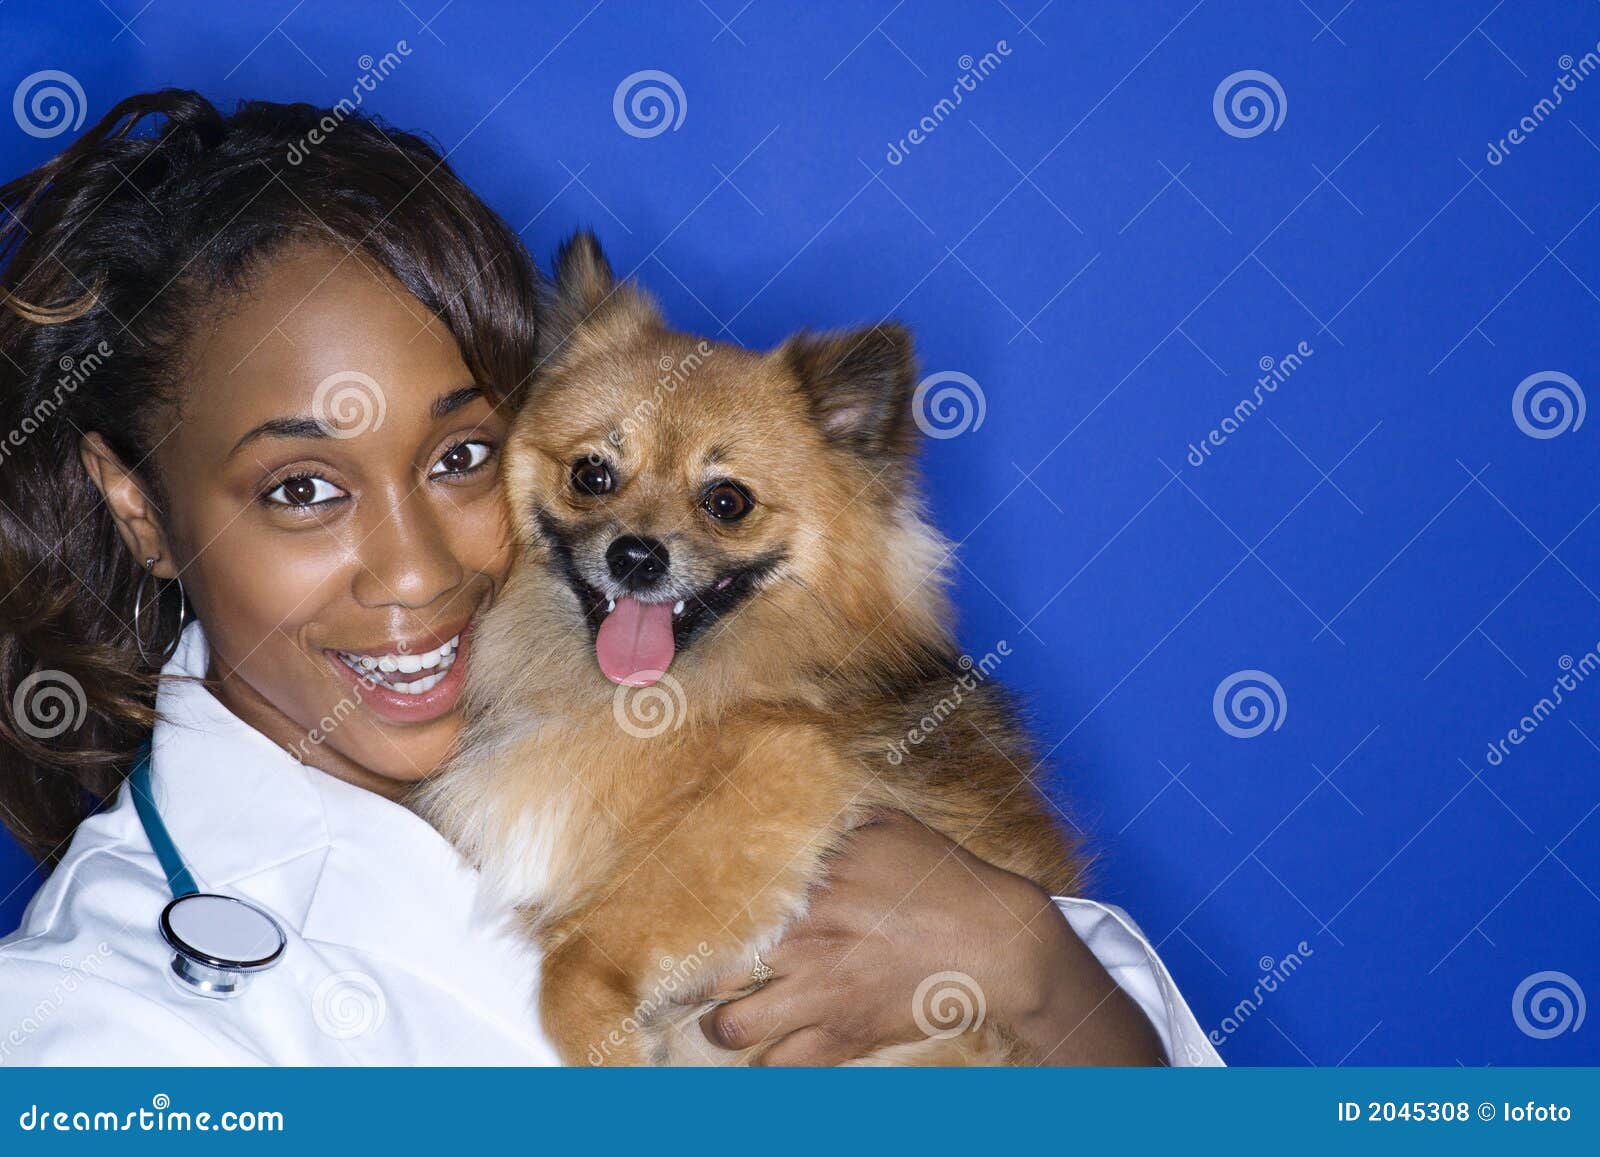 woman veterinarian and dog.